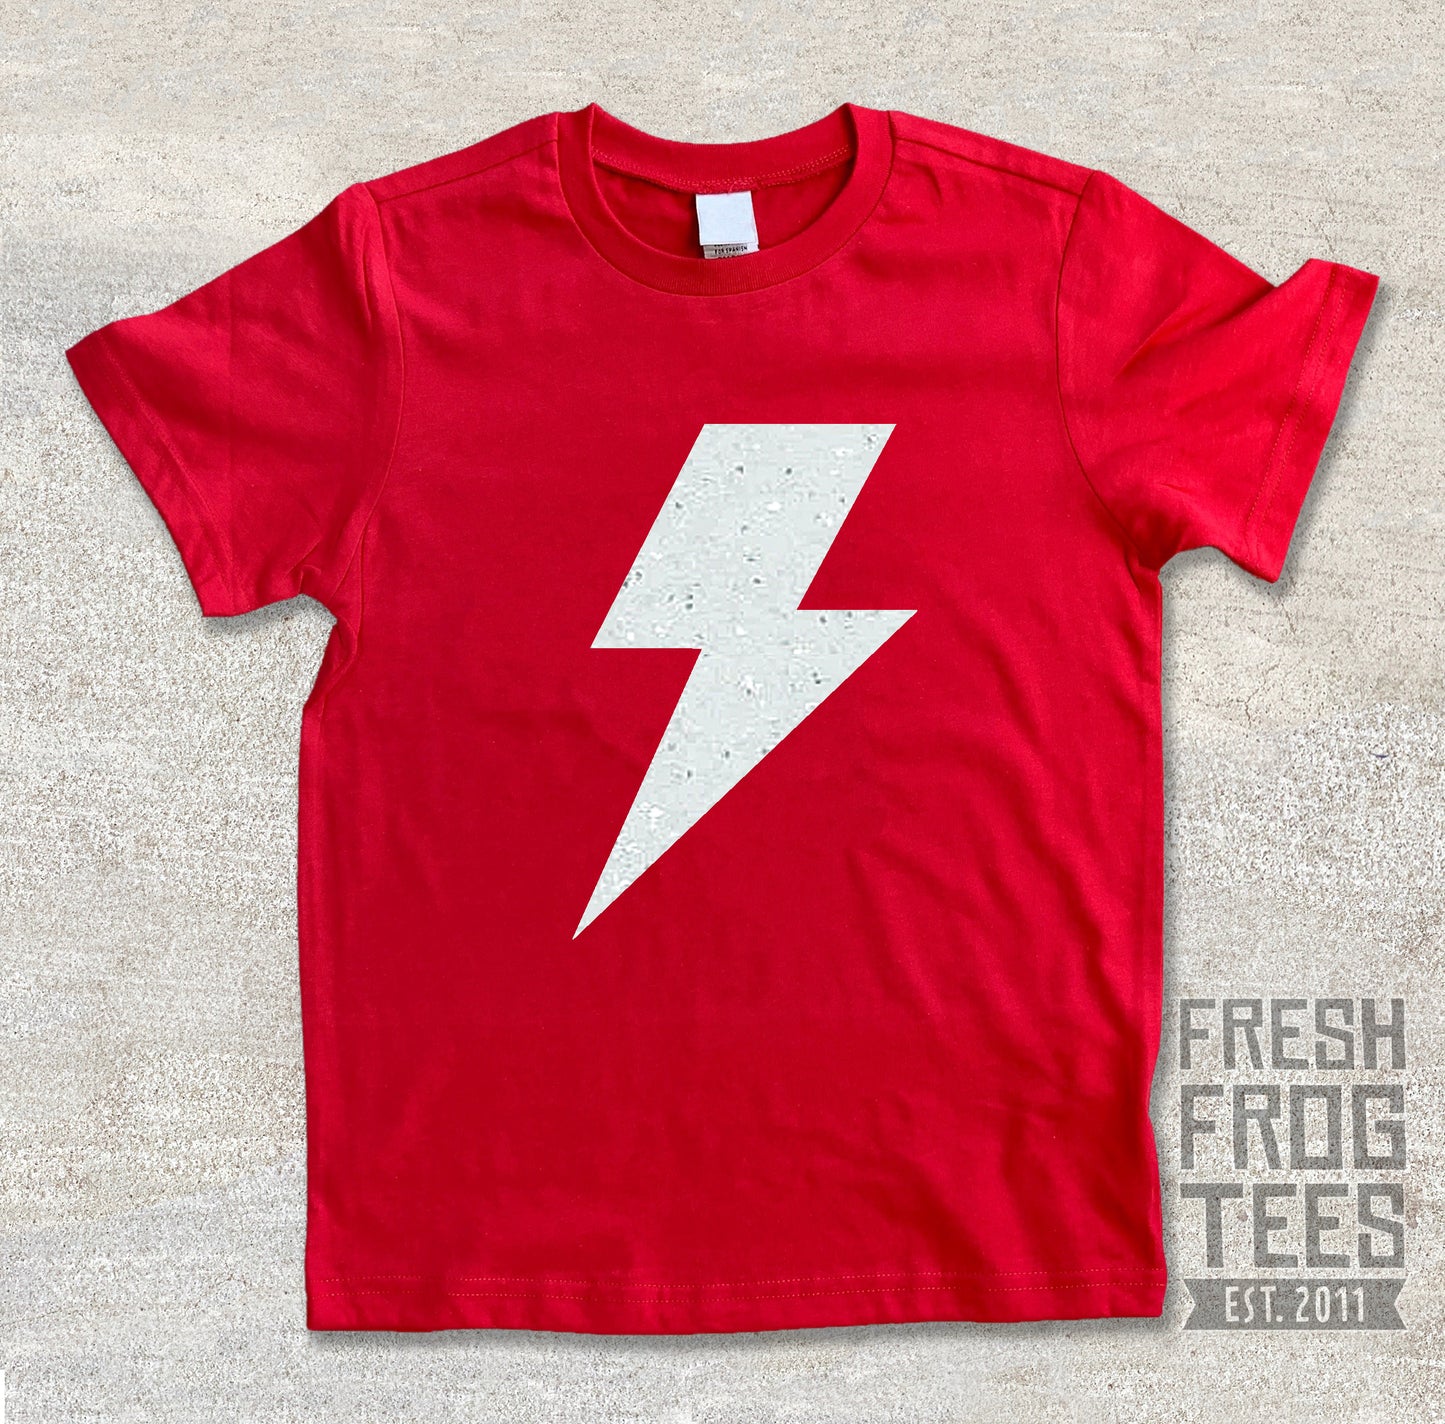 Glitter Lightning bolt superhero shirt